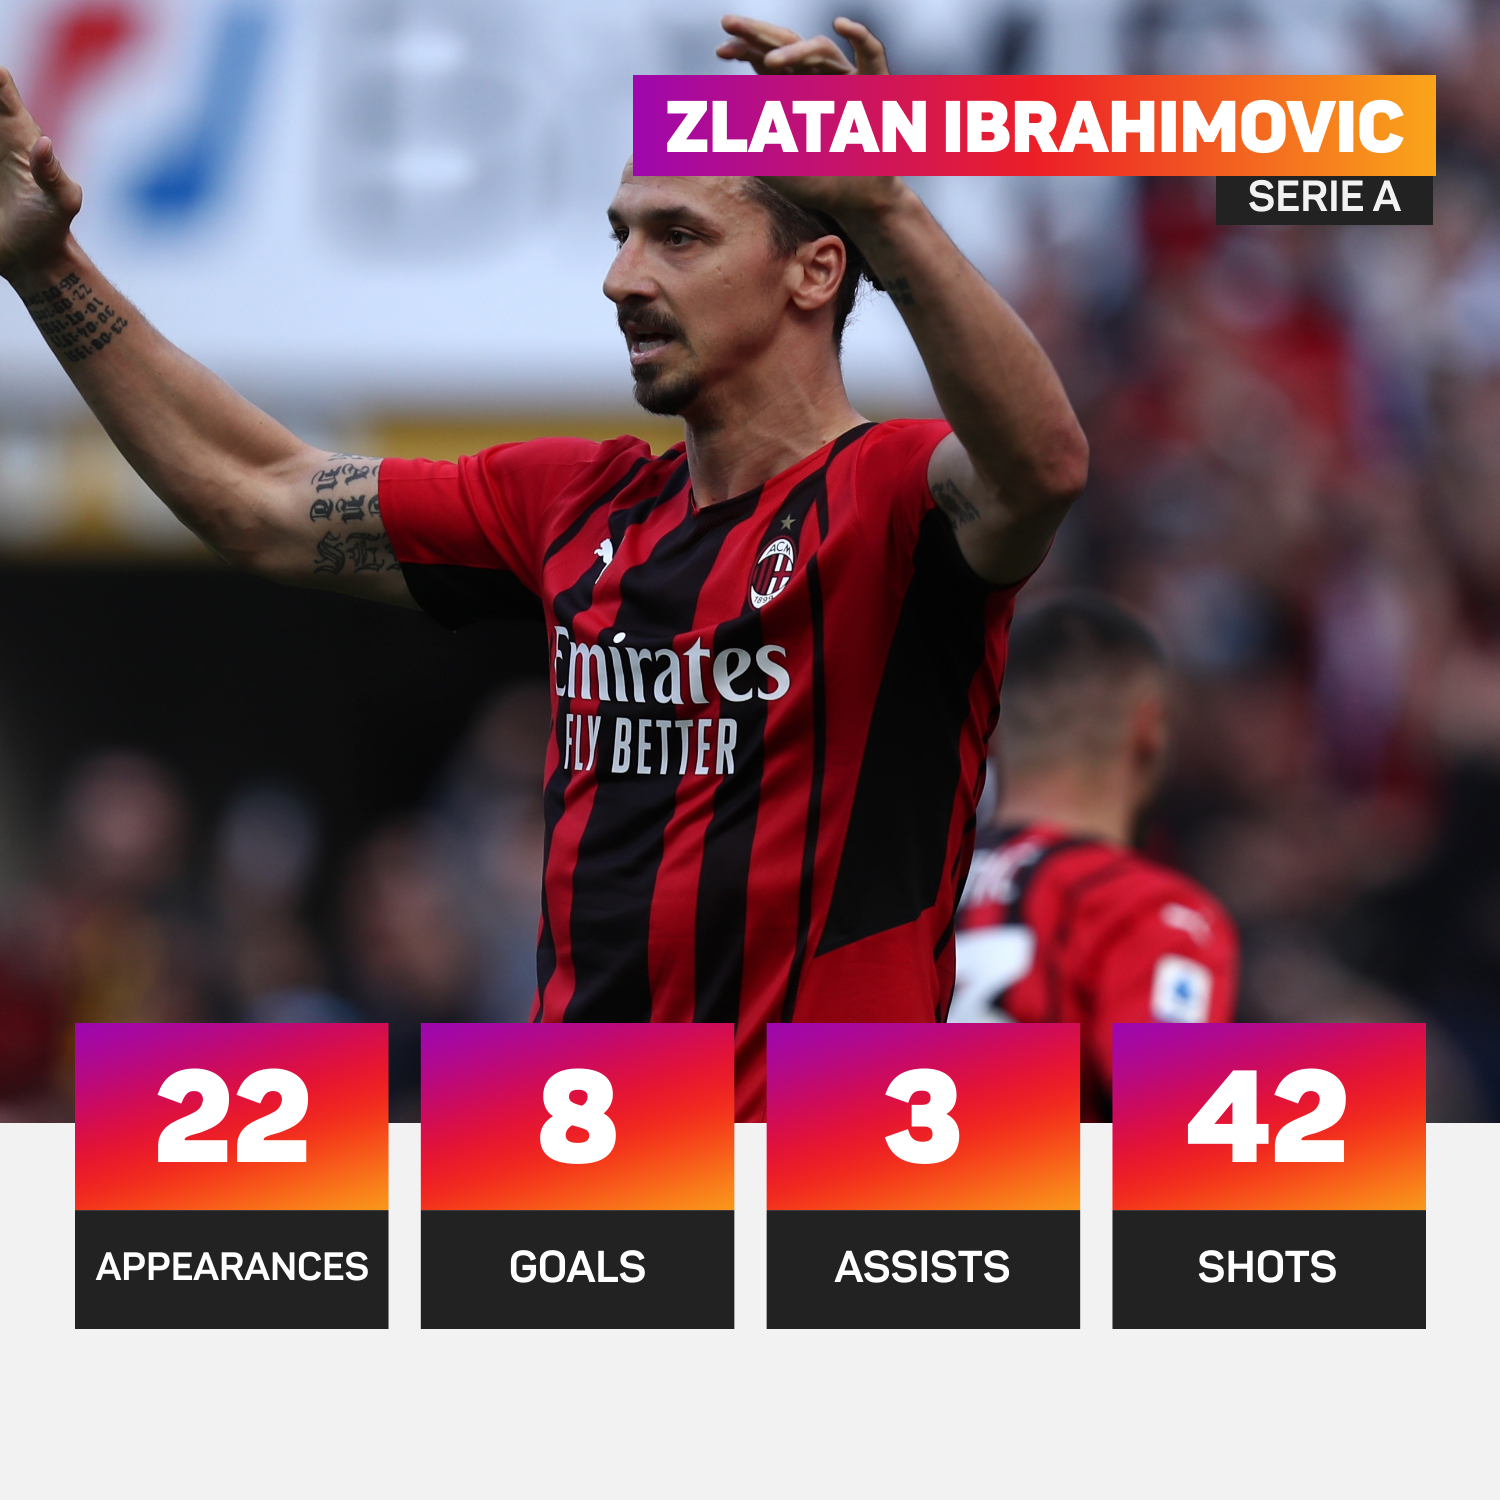 Zlatan Ibrahimovic has played hi spart this season